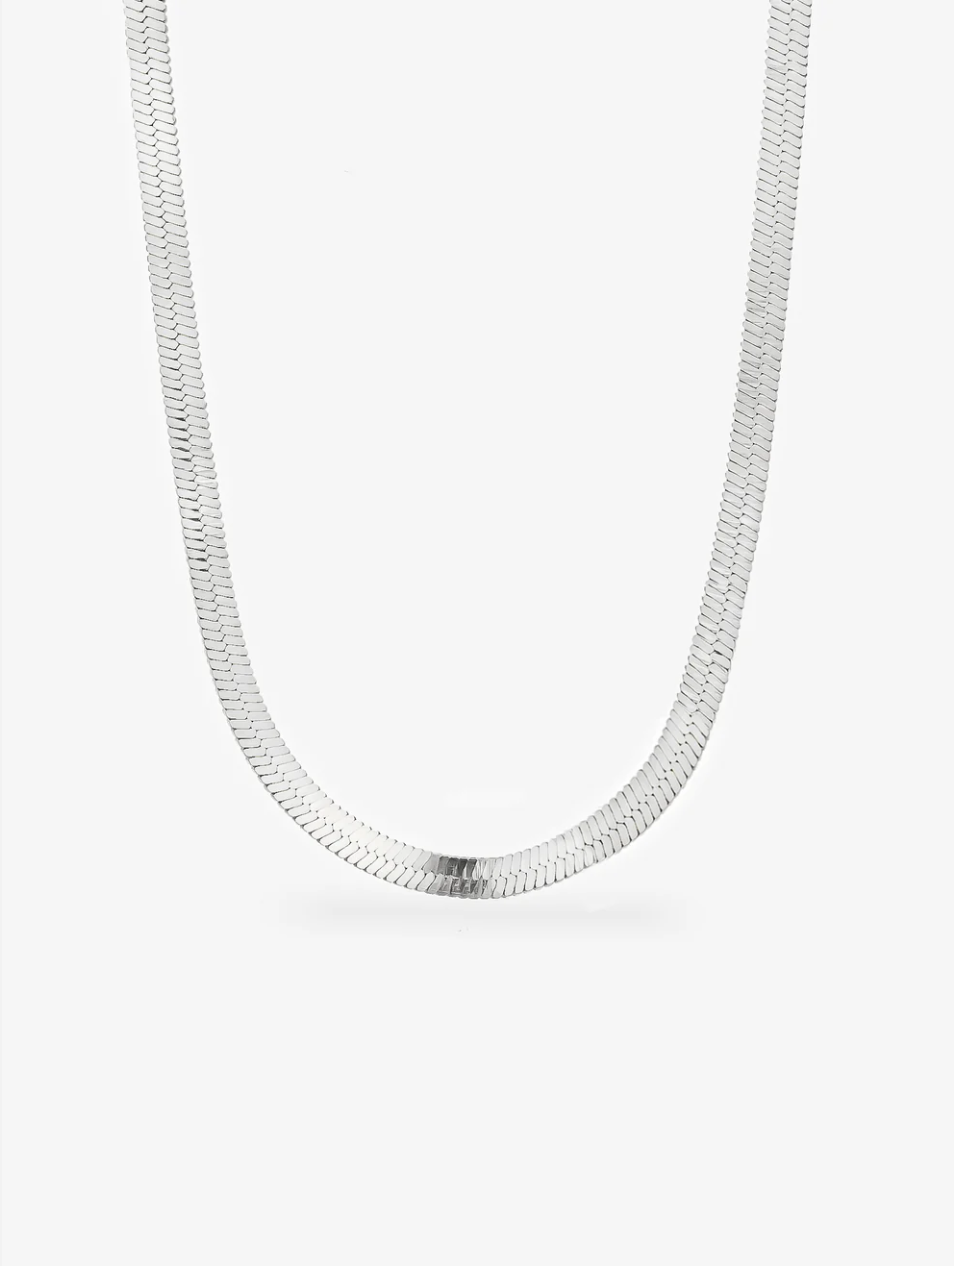 Herringbone Necklace - 4mm Silver